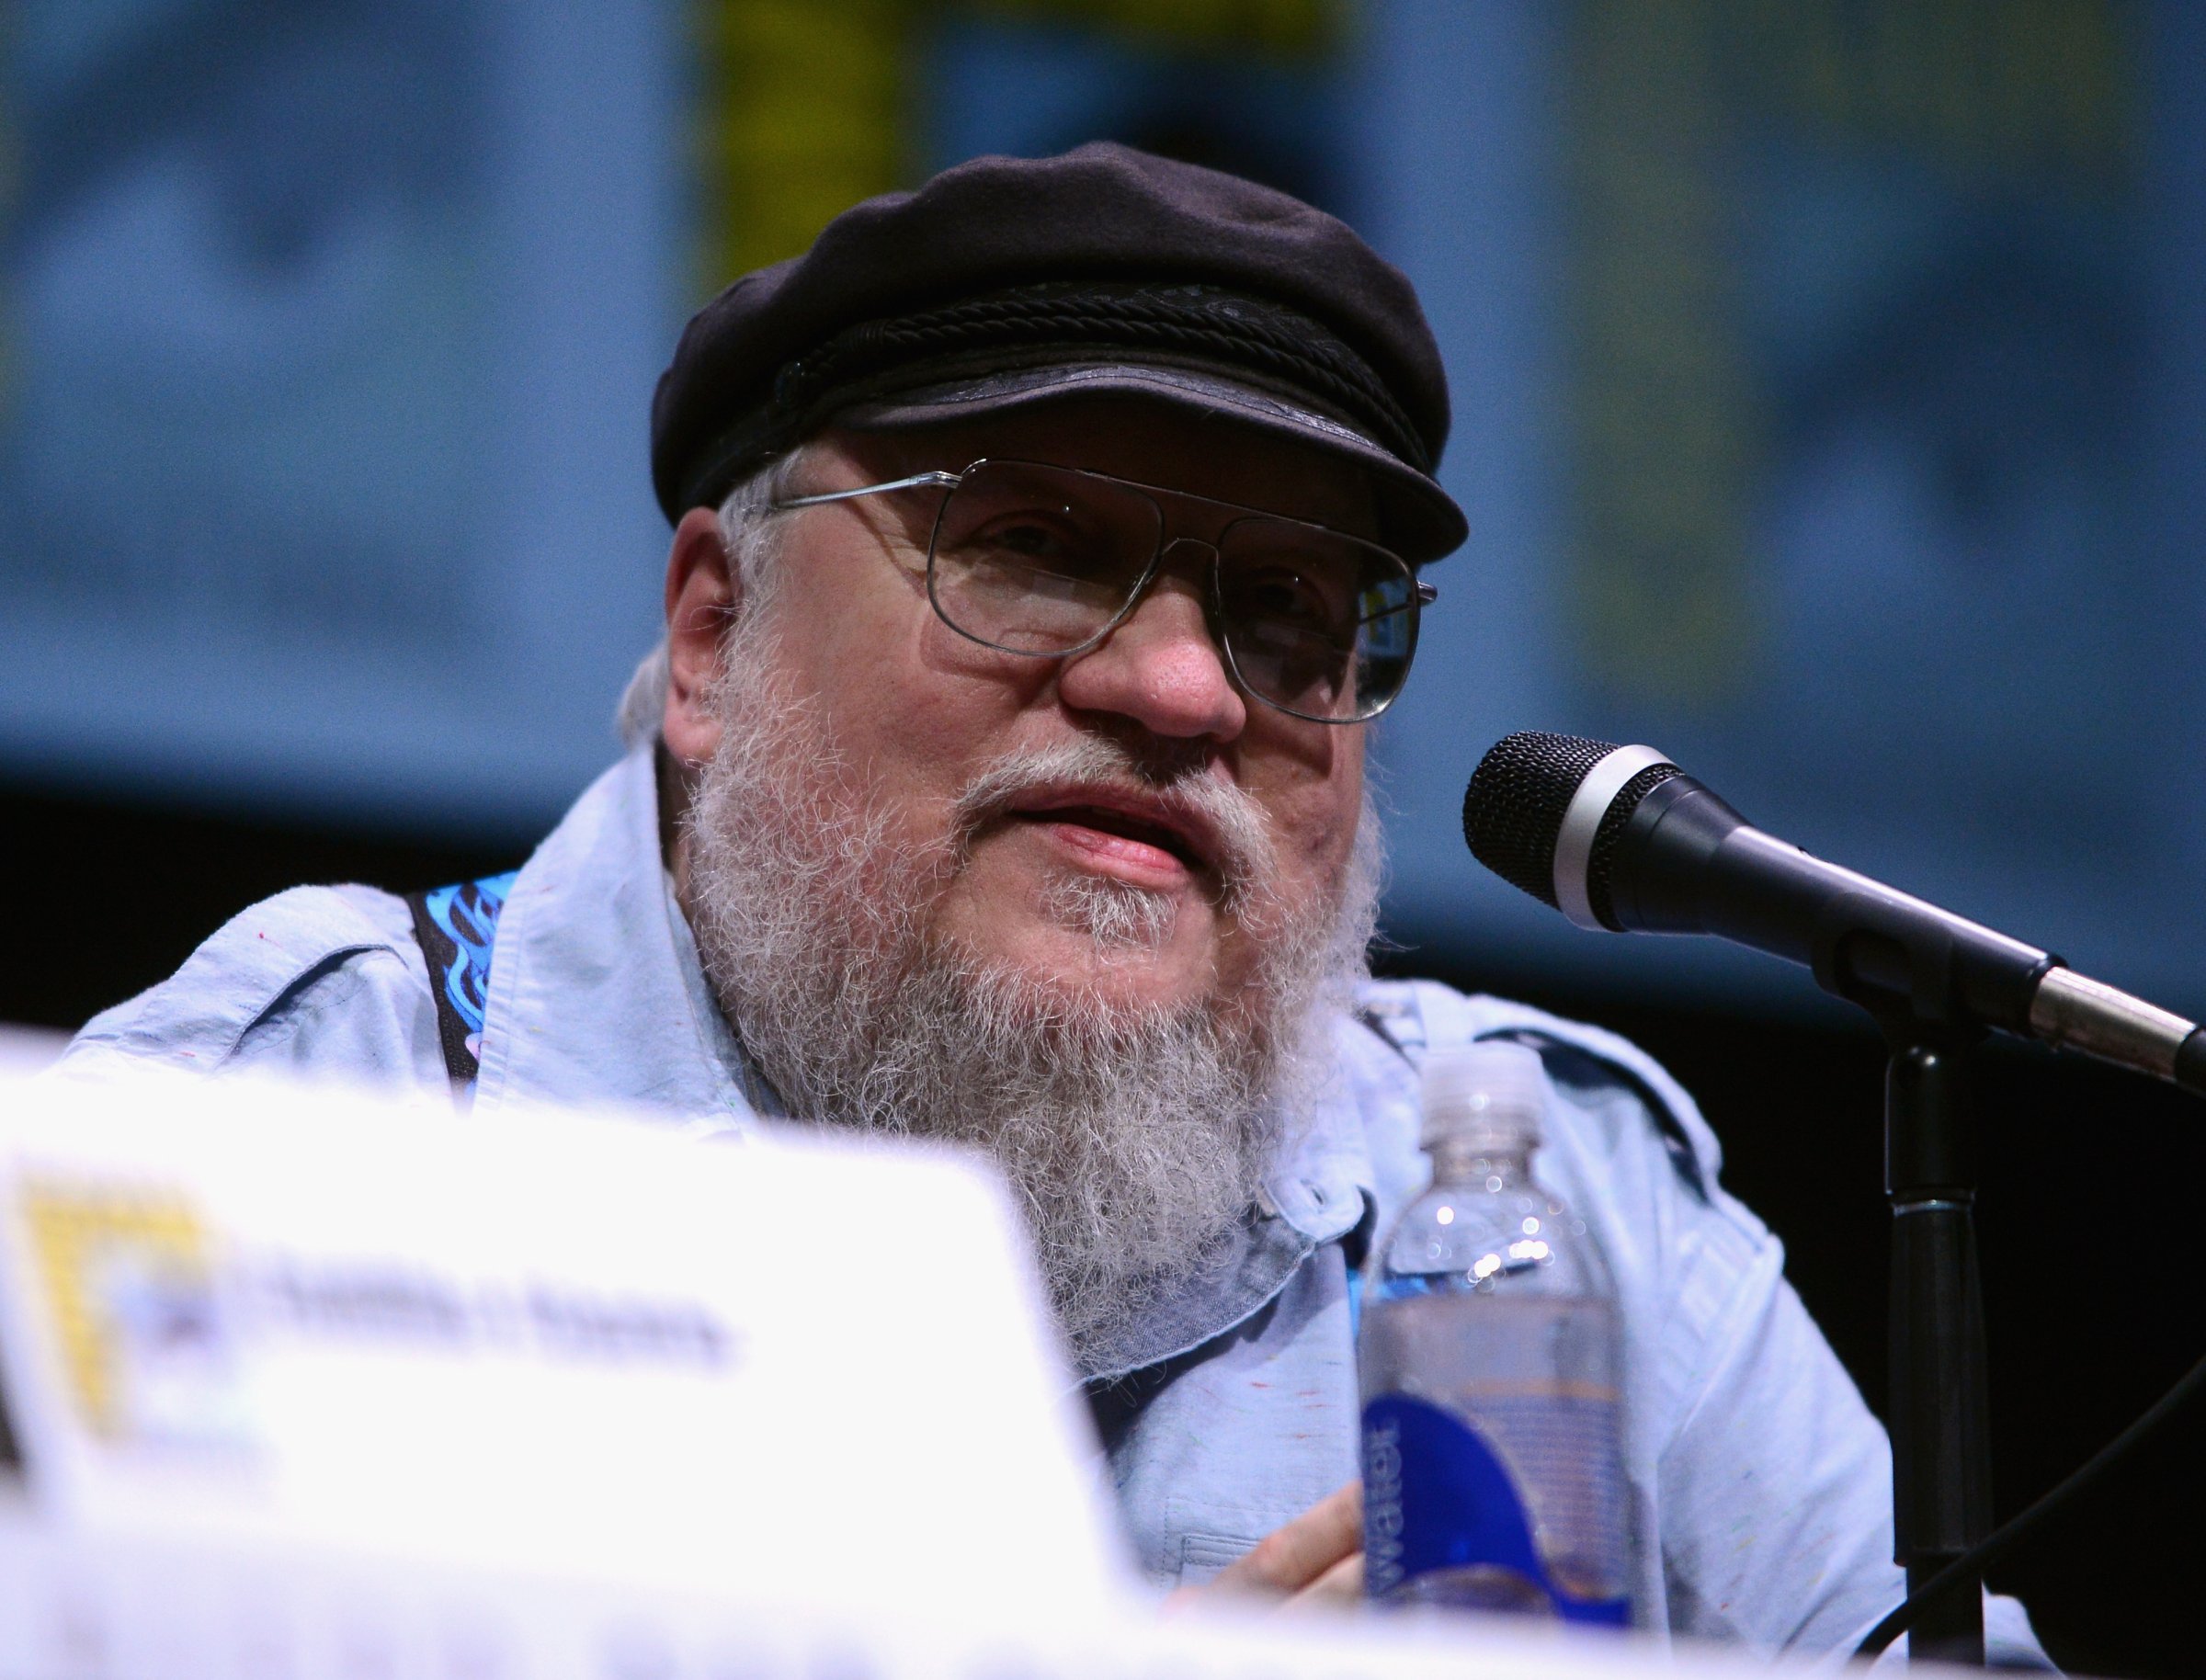 "Game Of Thrones" Panel - Comic-Con International 2013